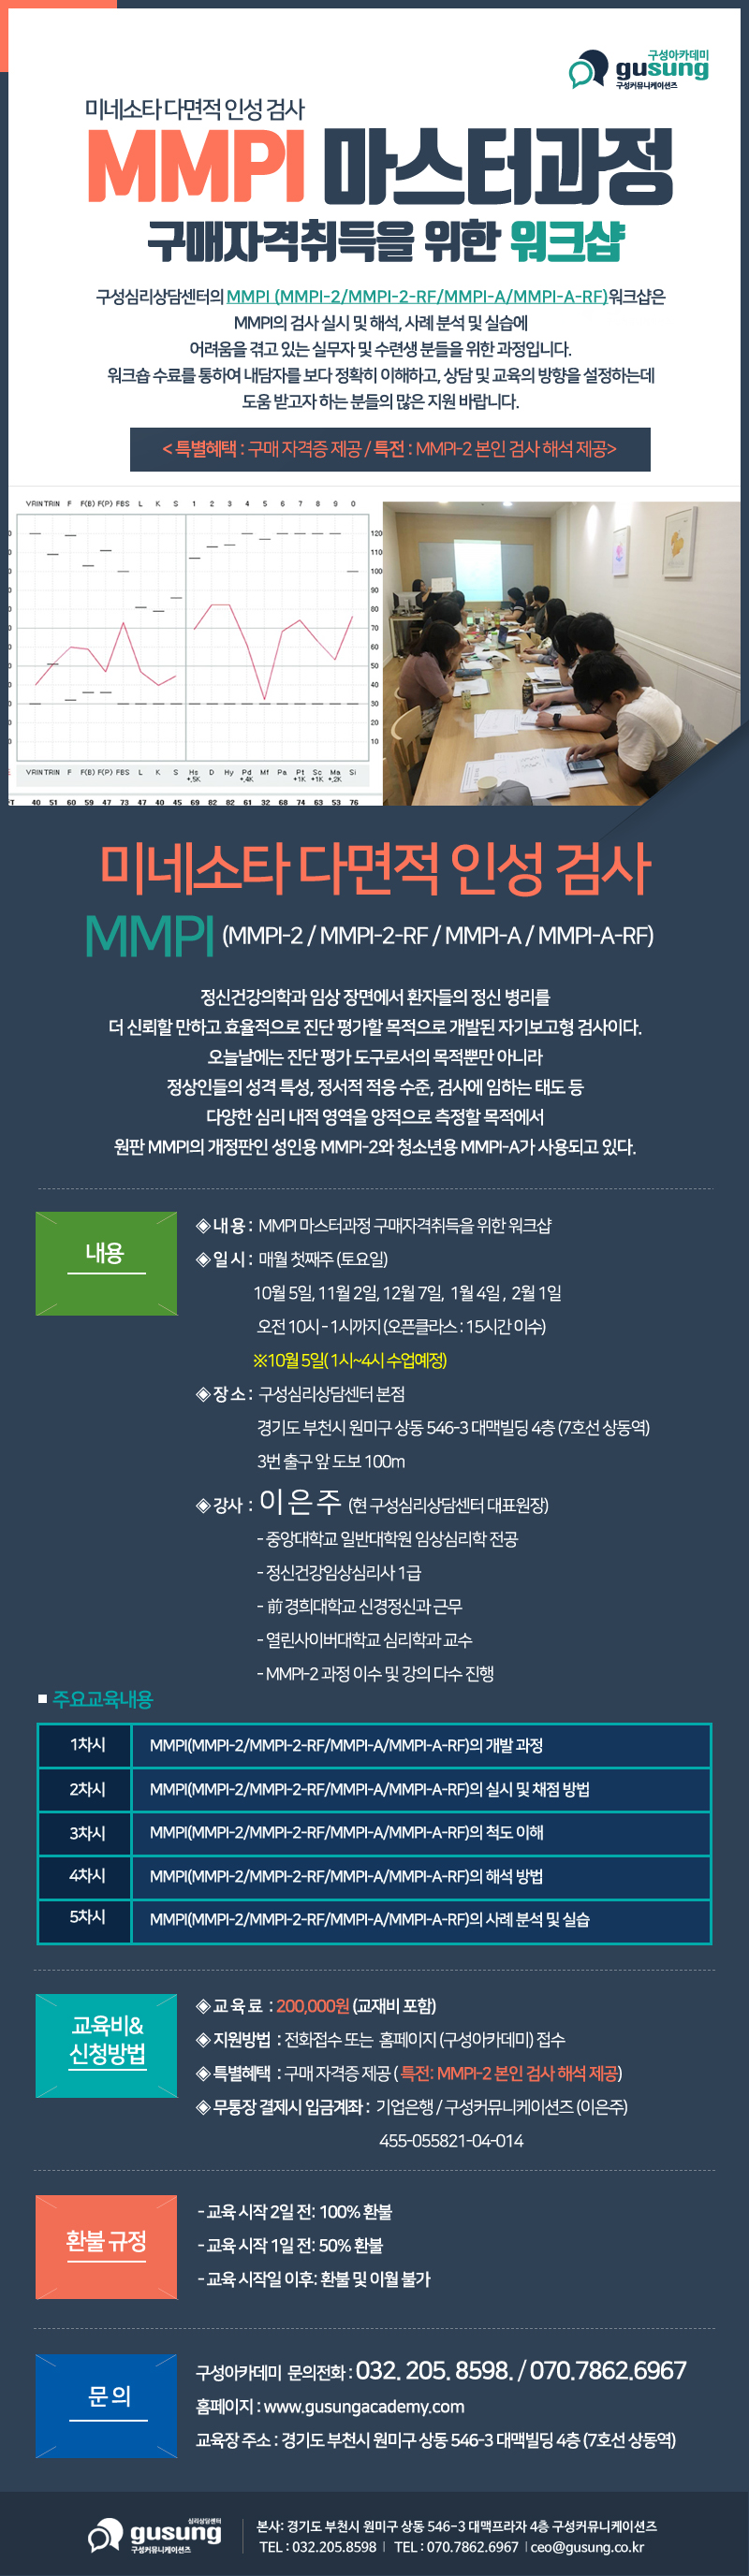 MMPI 마스터과정 구매자격취득을 위한 워크샵 10월.jpg